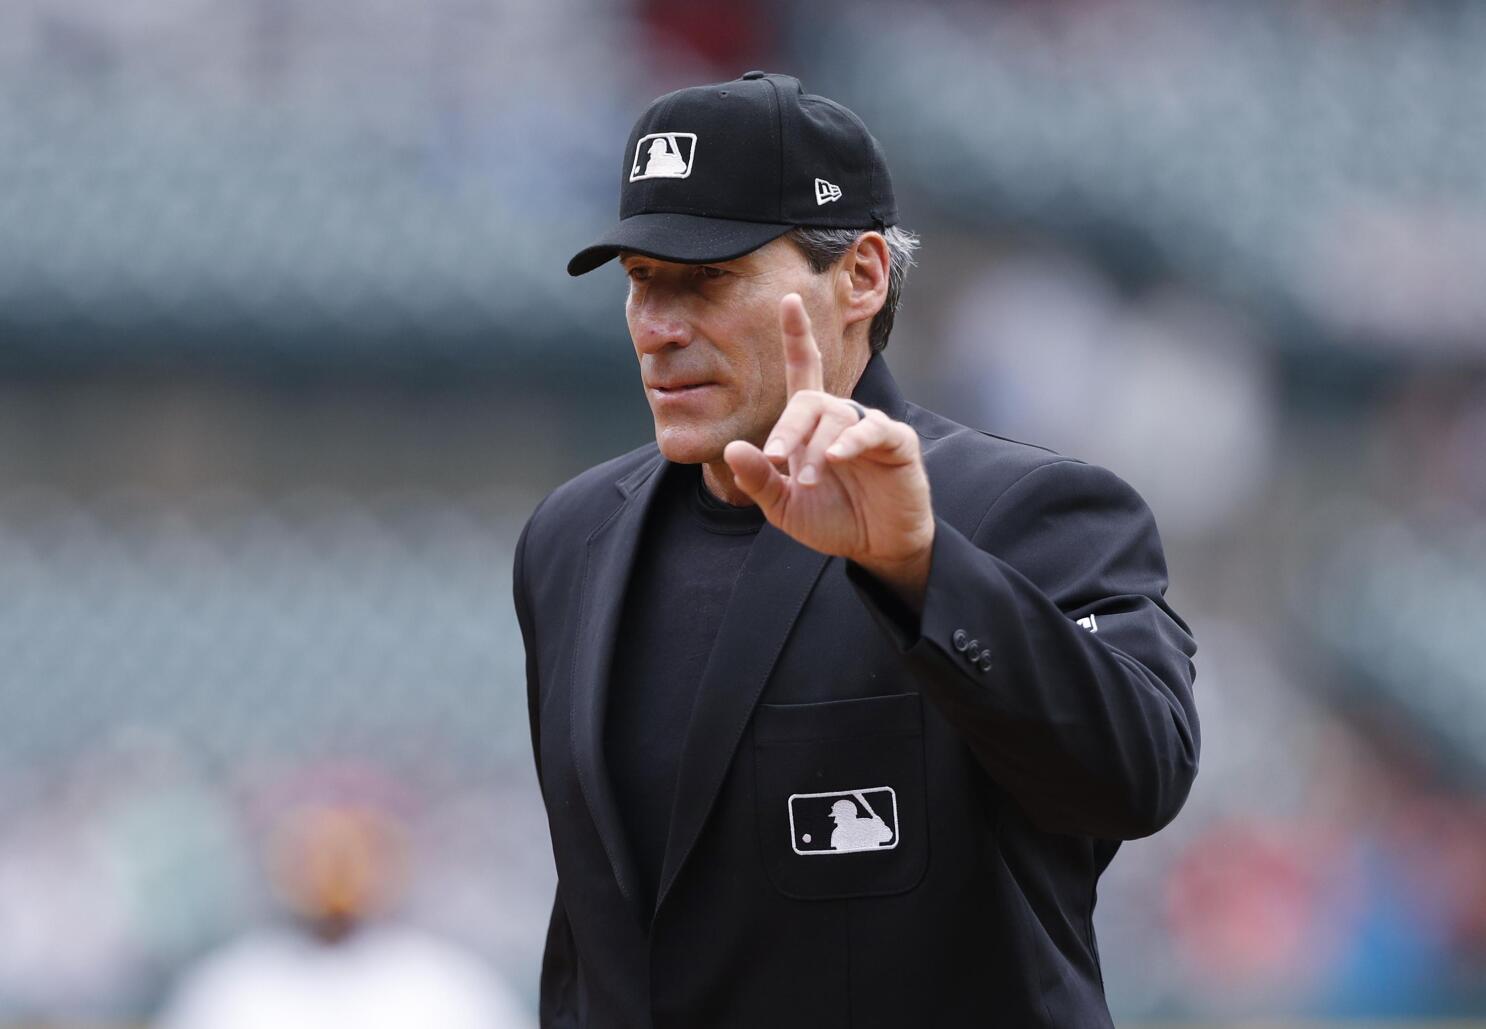 Major League Baseball umpire Hernandez loses appeal of